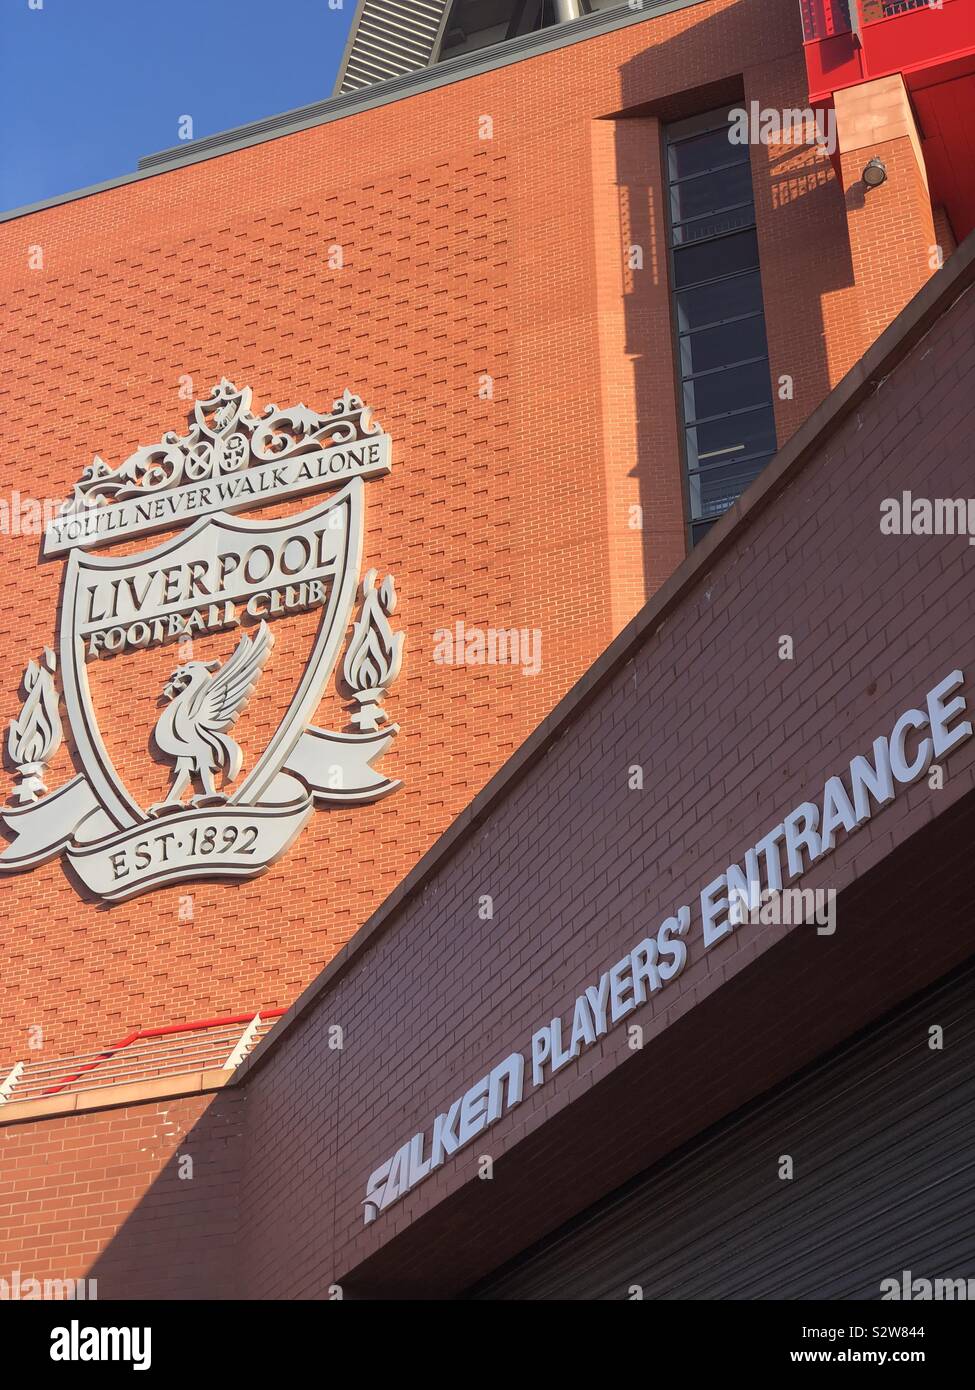 Anfield stadium Liverpool football club. You’ll never walk alone lfc crest badge on the stadium wall. Stock Photo